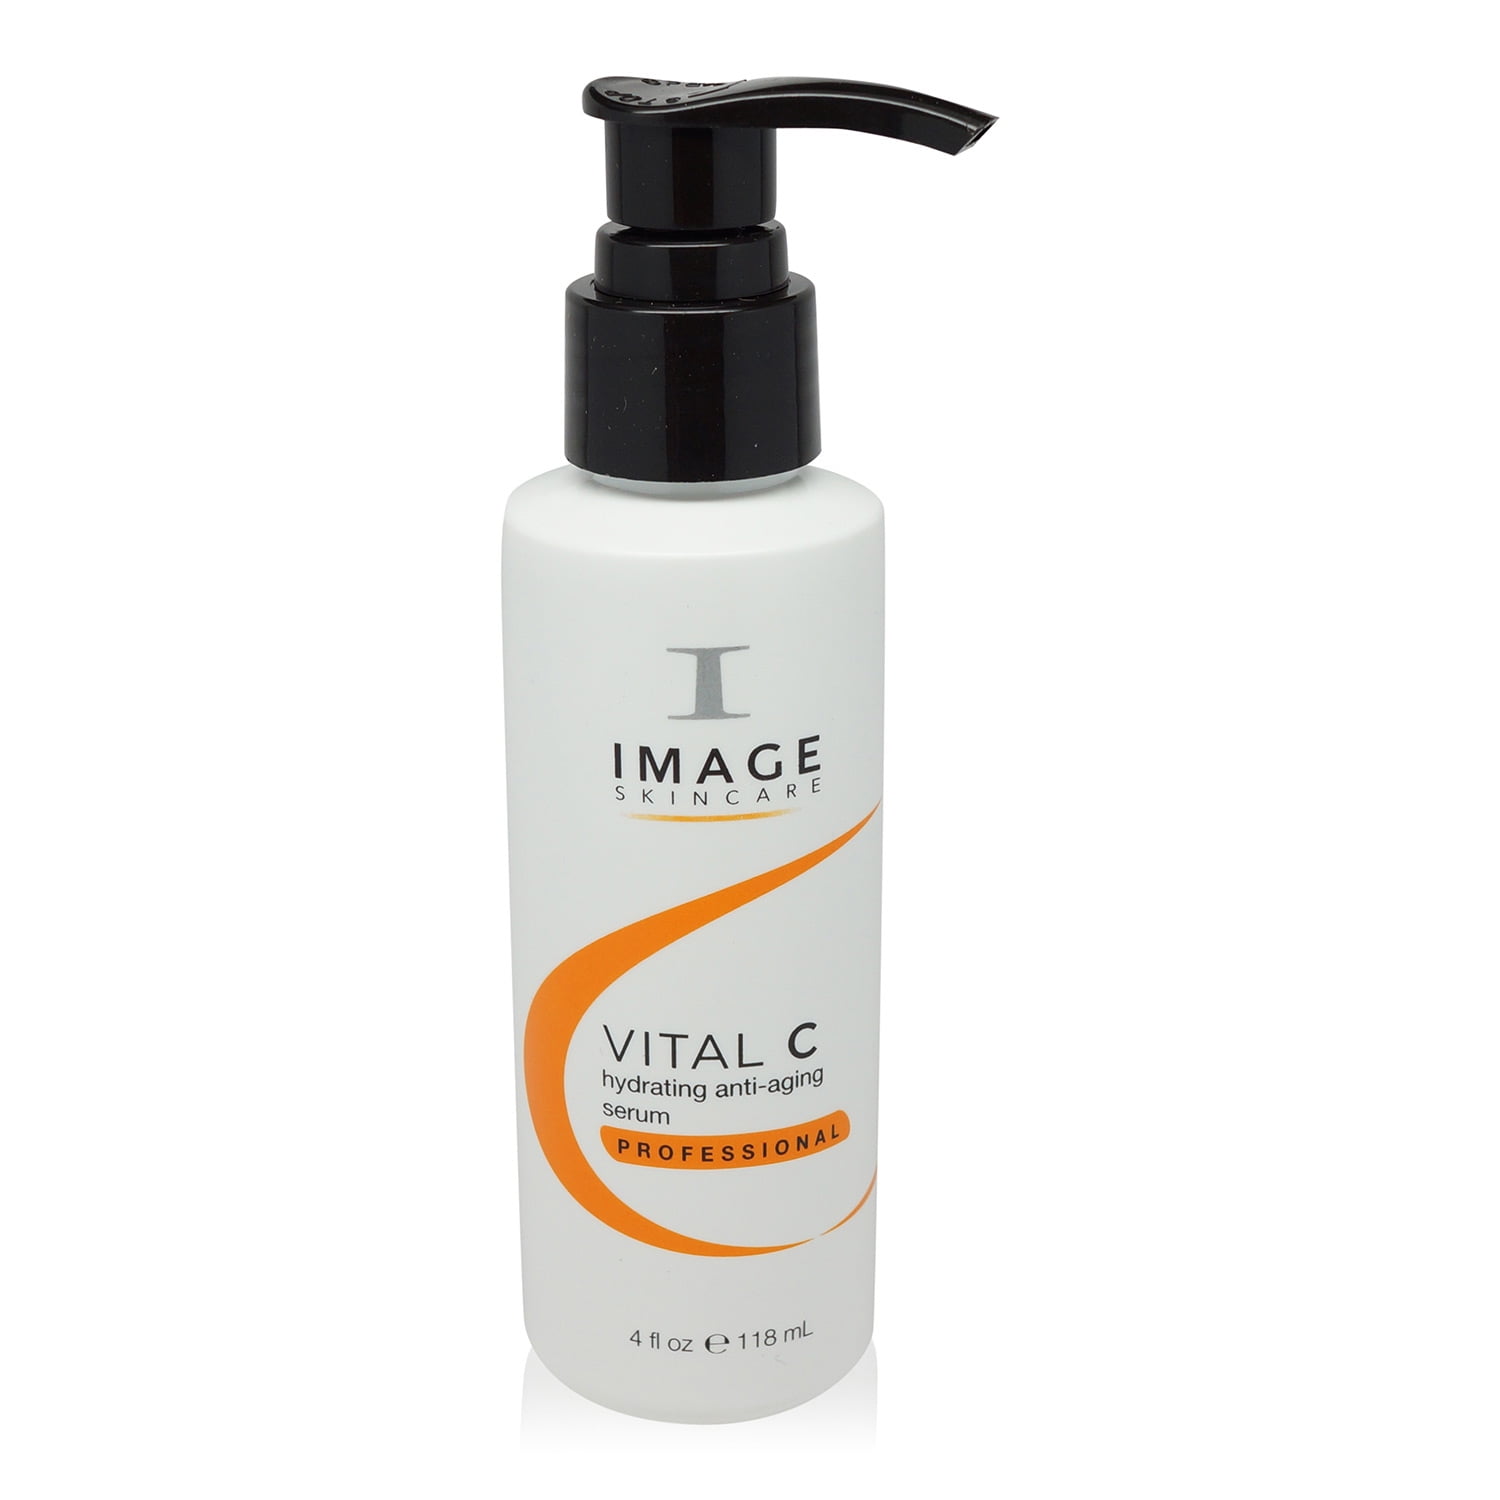 image skincare vital c hydrating anti aging serum reviews)